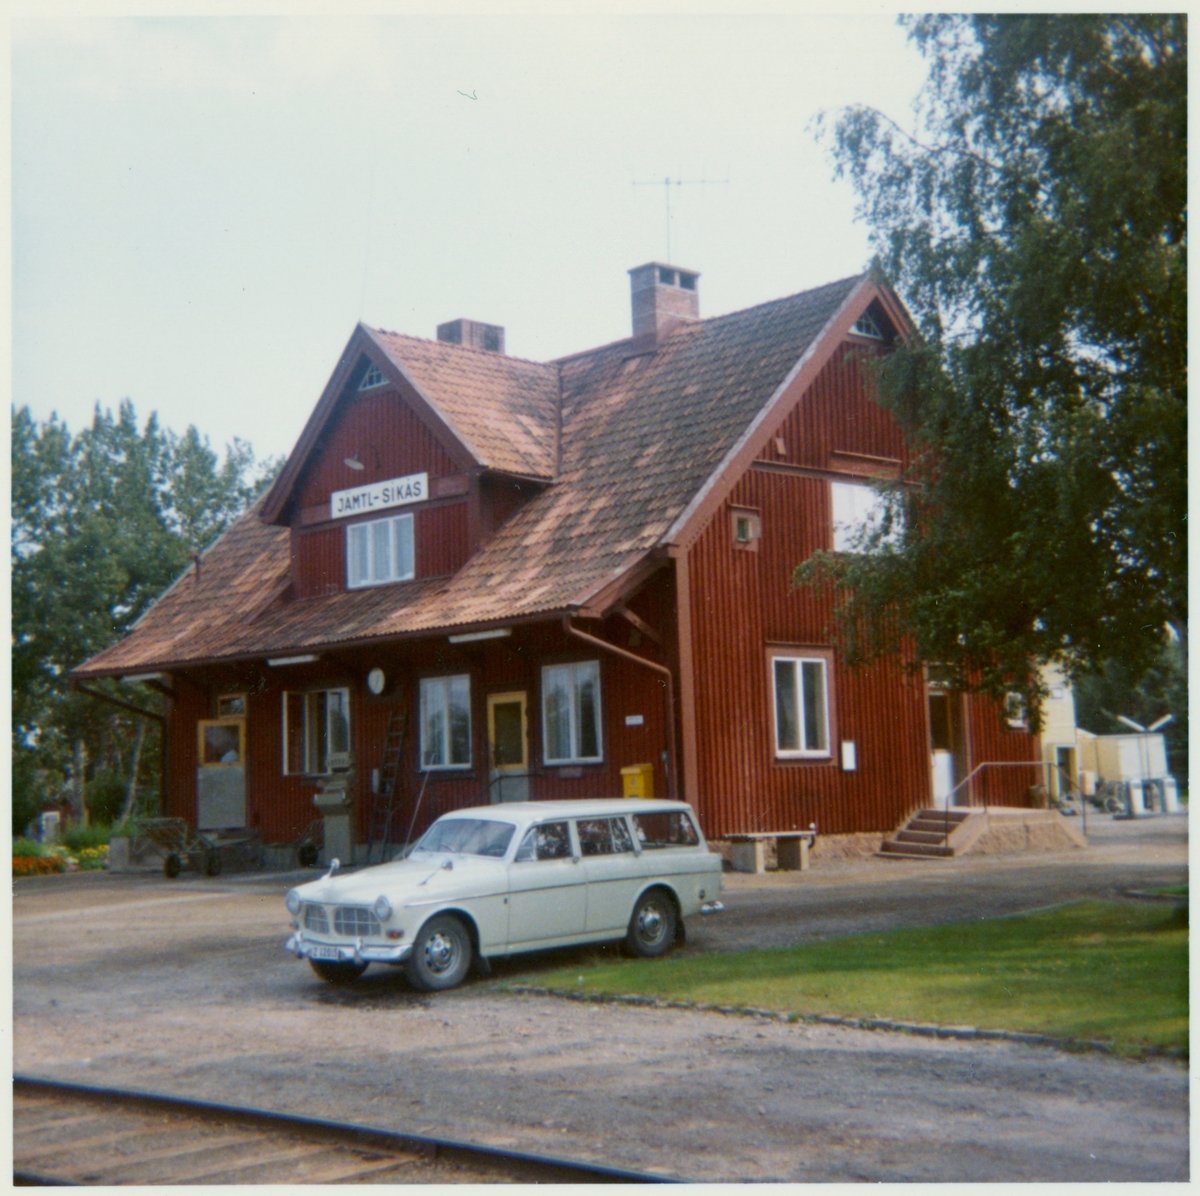 Jämtlands -Sikås station
Volvo Amazon